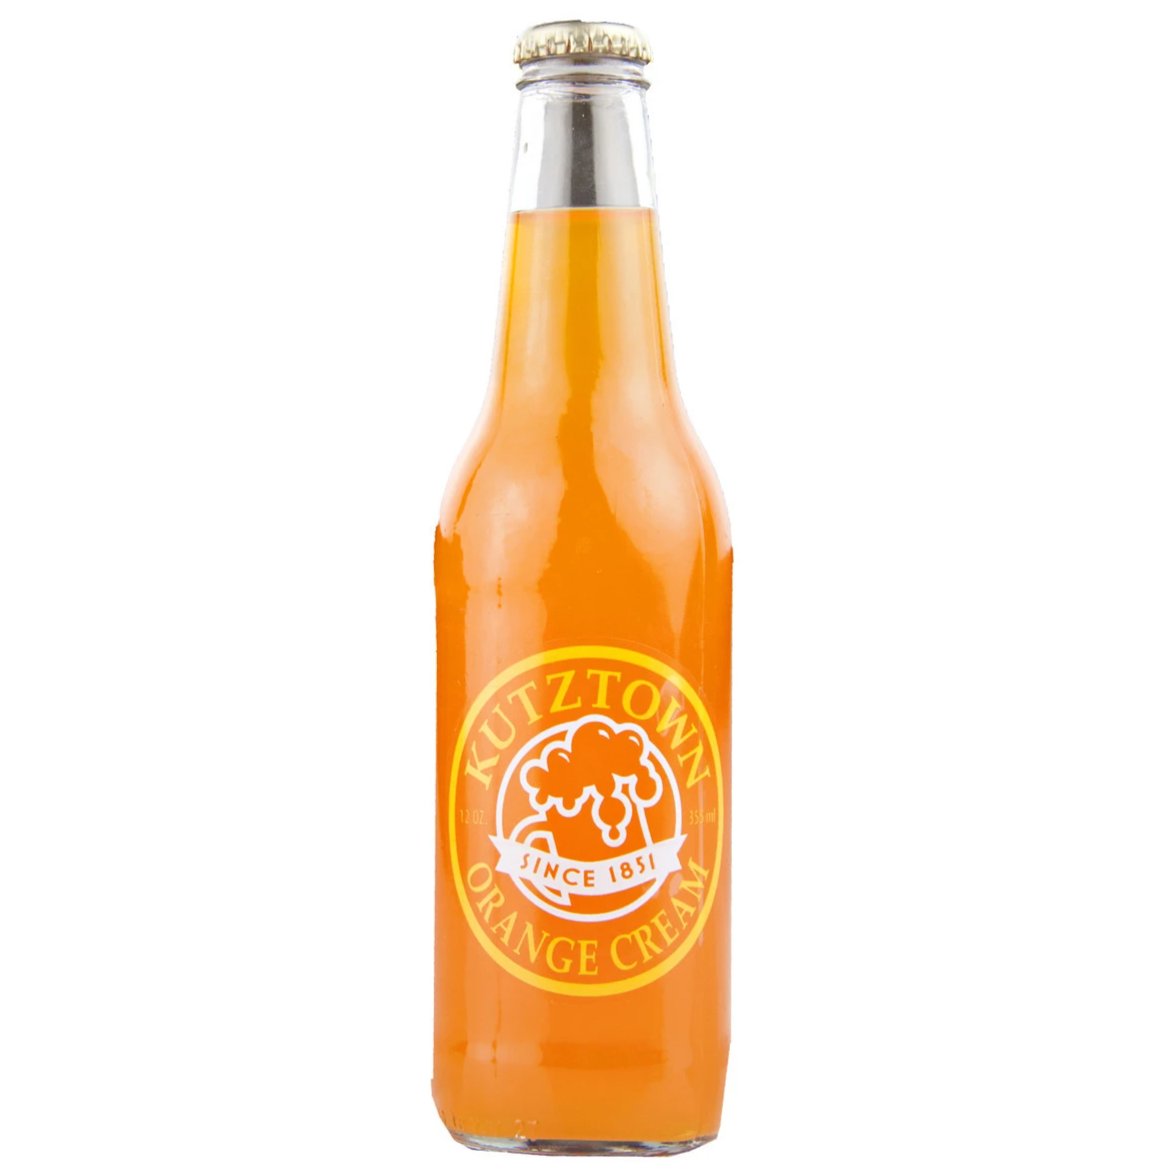 Kutztown Orange Cream - 12 oz (12 Glass Bottles)